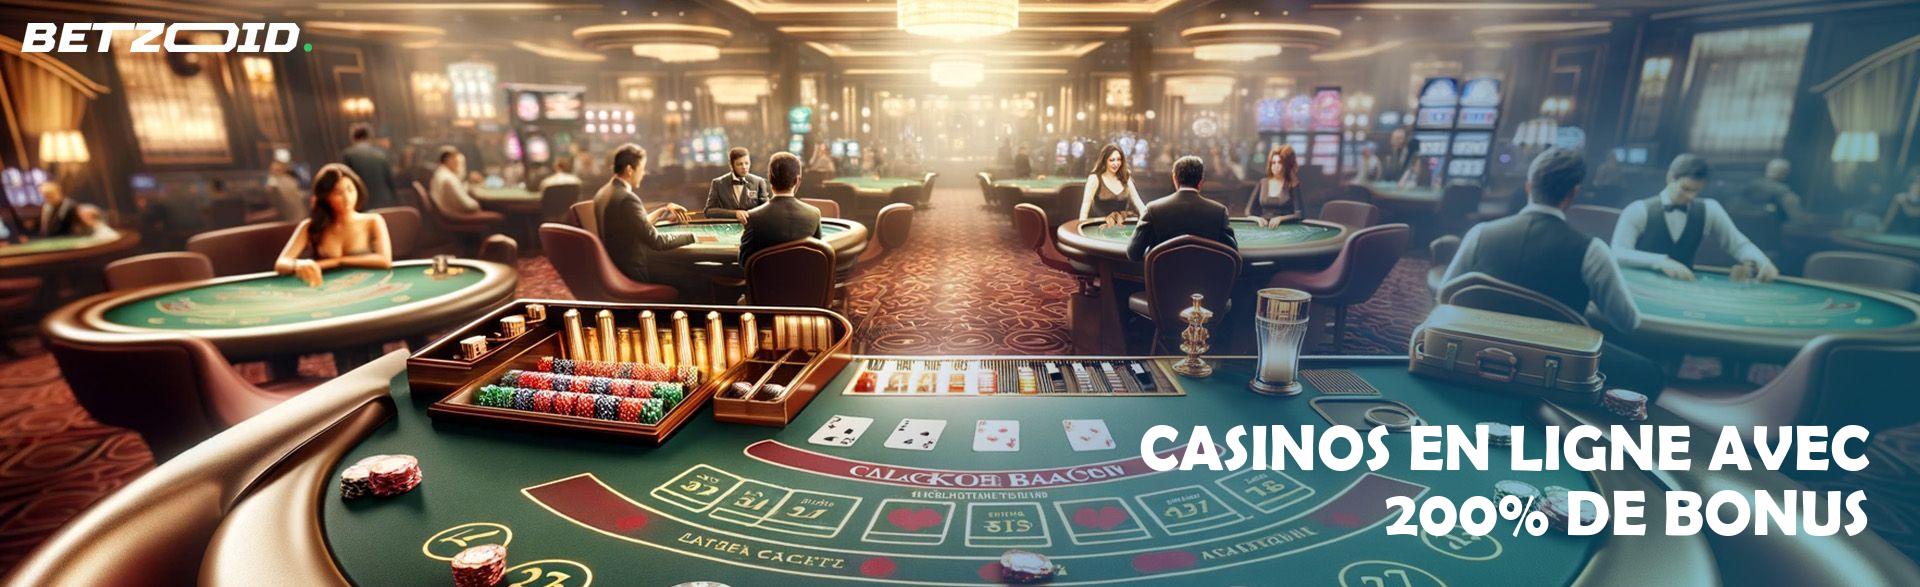 Casinos en Ligne avec 200% de Bonus.